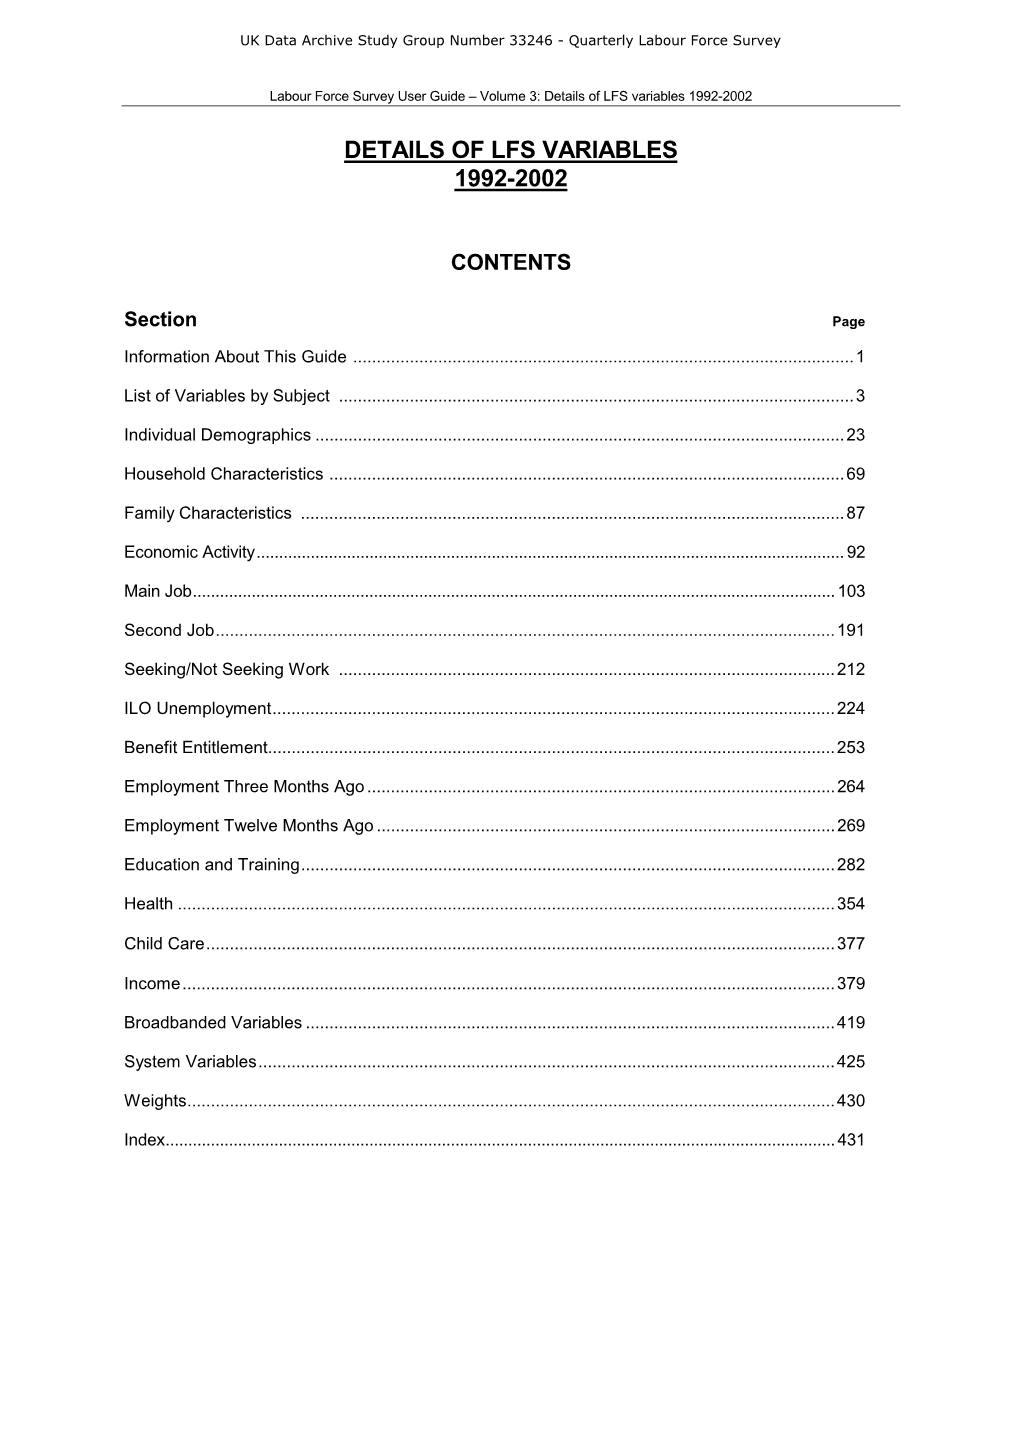 Labour Force Survey User Guide – Volume 3: Details of LFS Variables 1992-2002